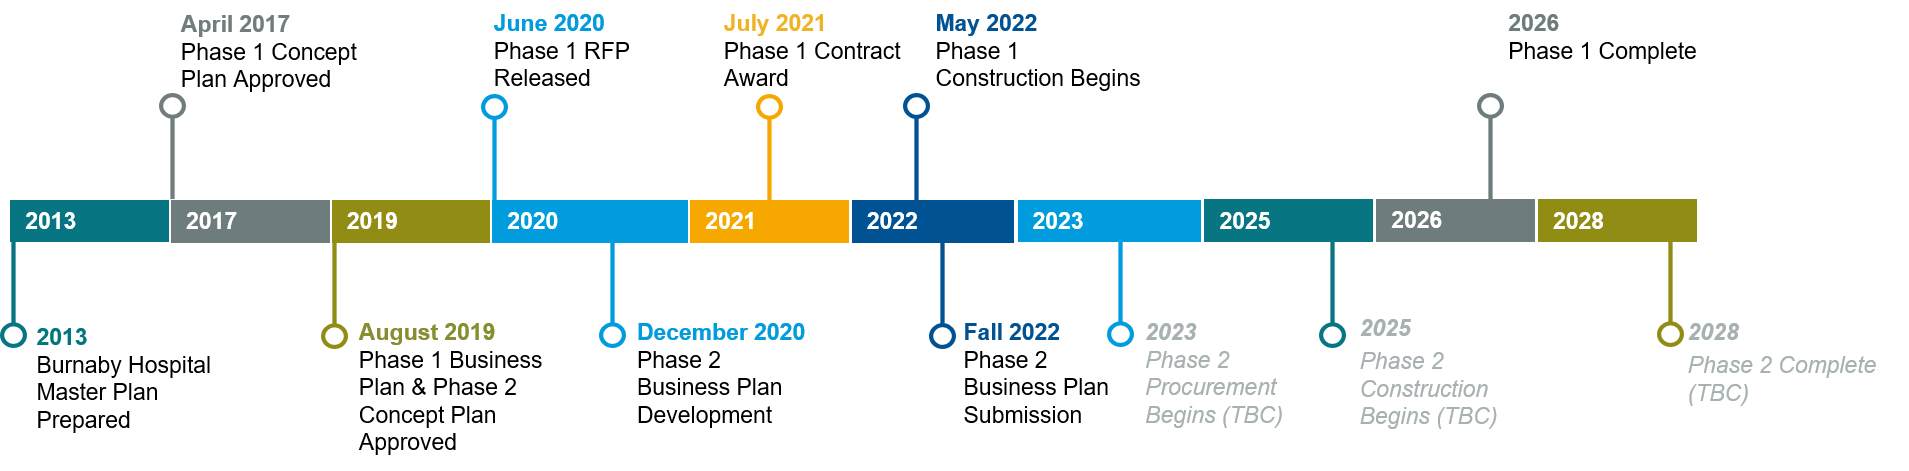 Burnaby hospital redevelopment project timeline July 2021